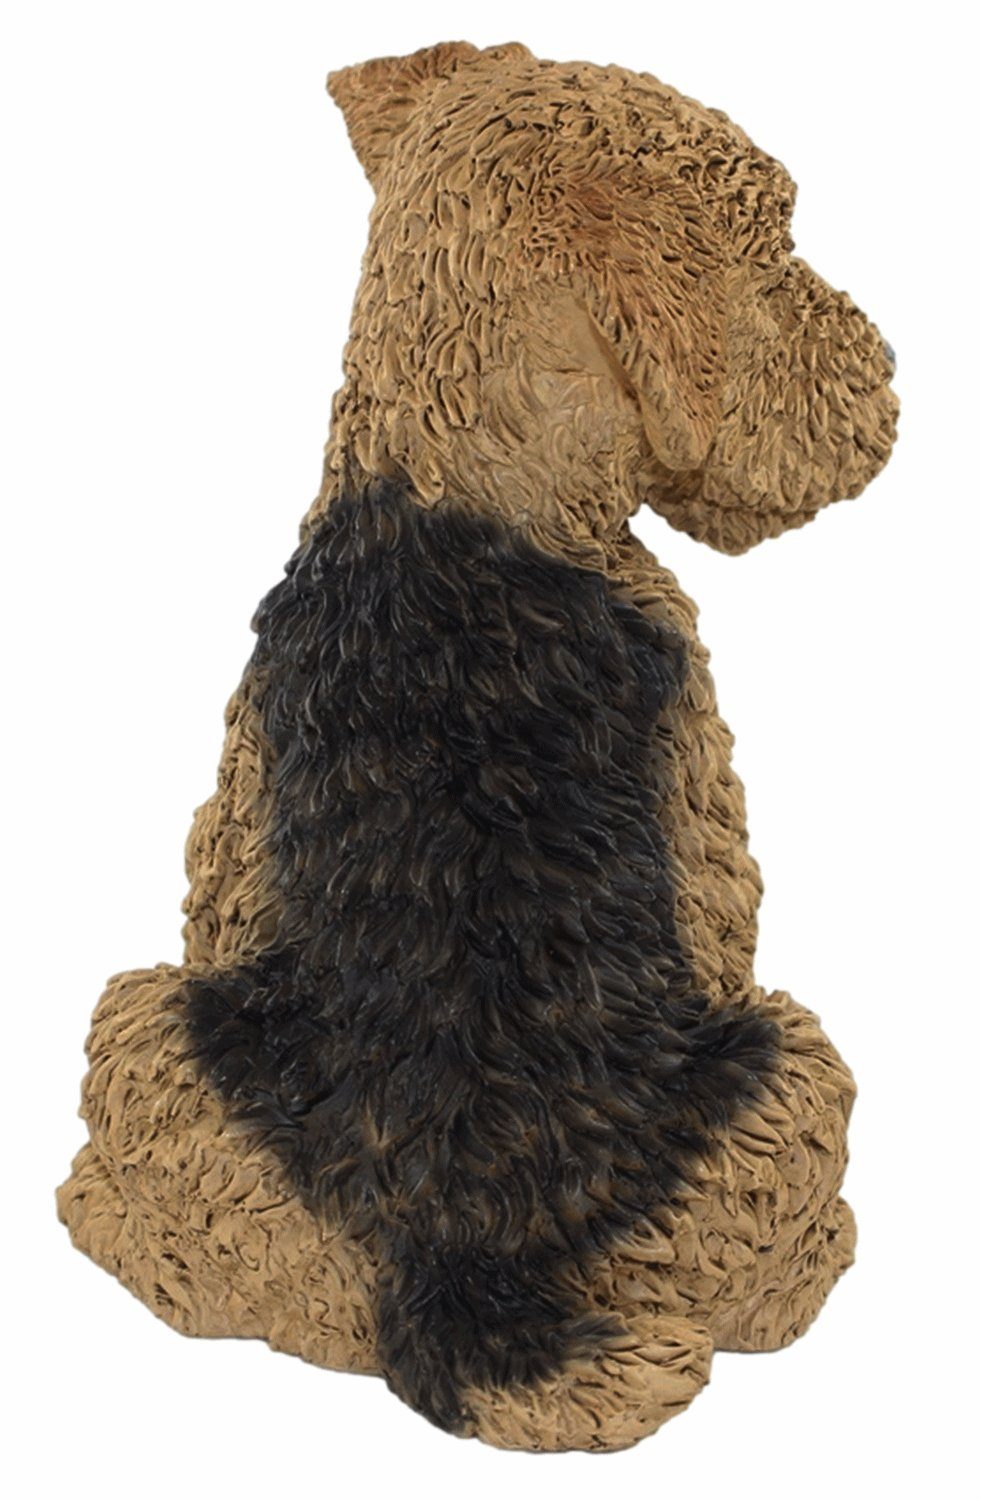 24 H aus cm Tierfigur Hundefigur Hund Deko Kollektion Resin Castagna Terrier Figur Castagna Airedale Welpe sitzend